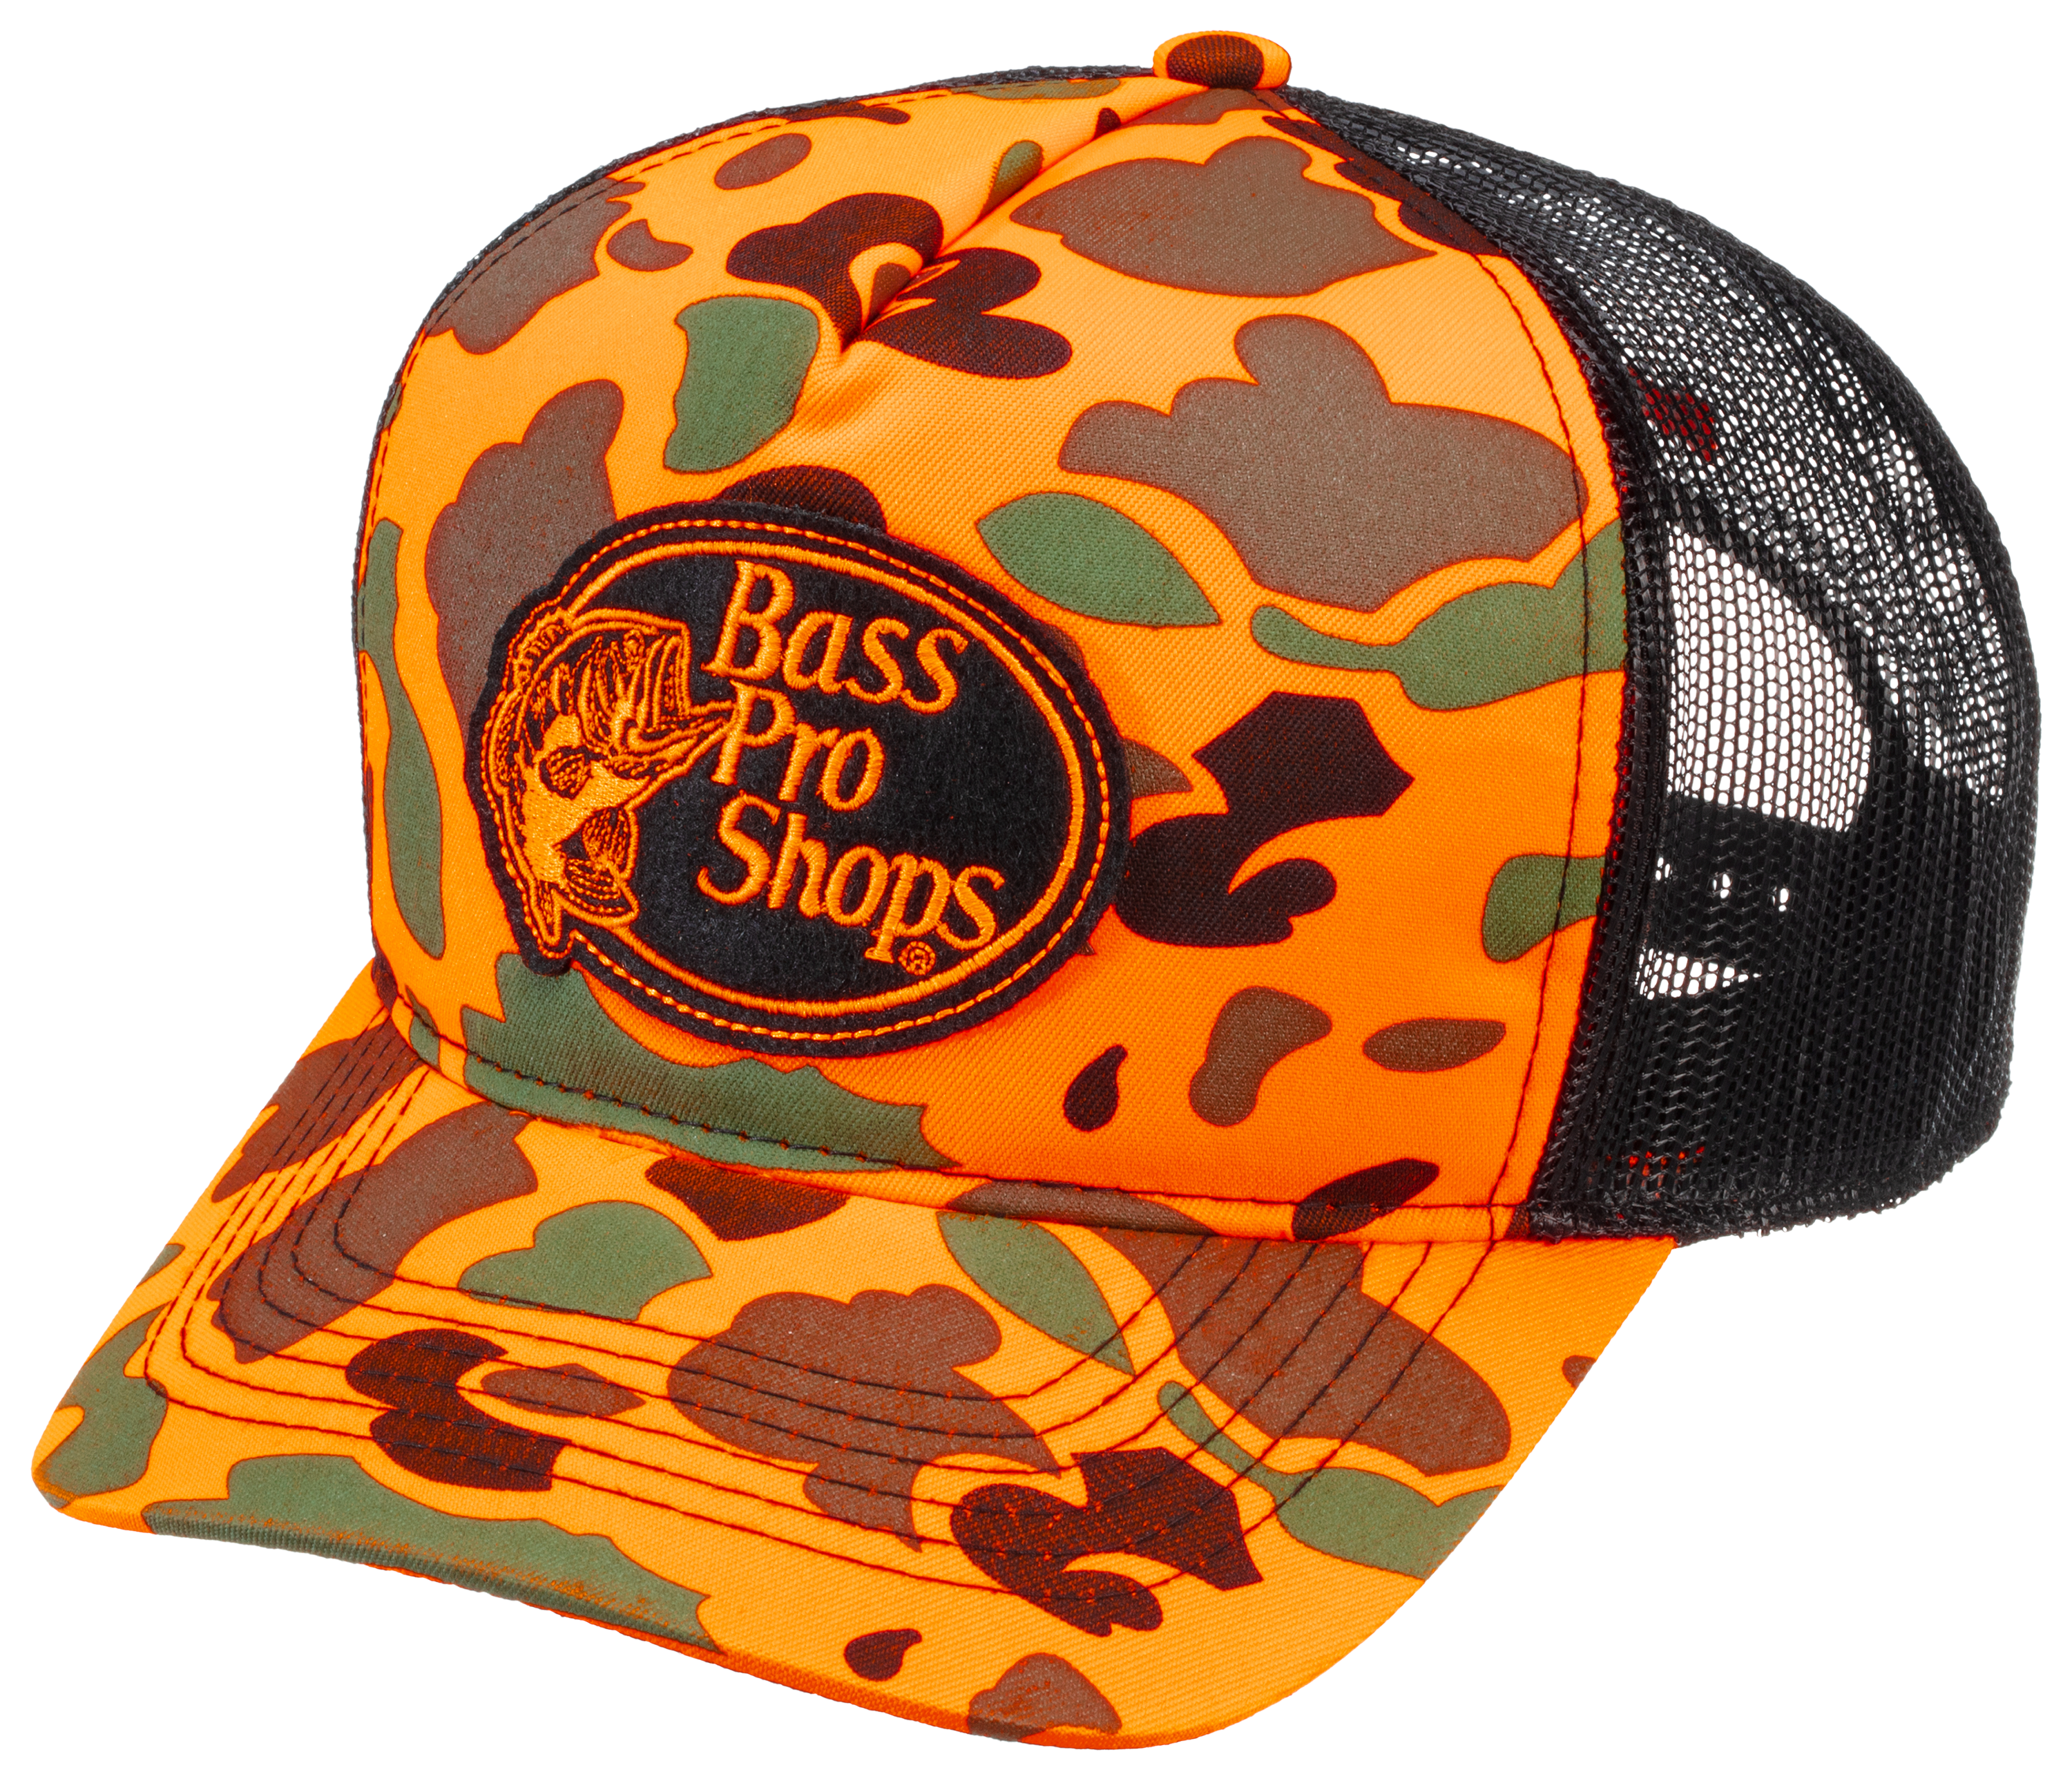 Bass Pro Shops Throwback Foam Cap